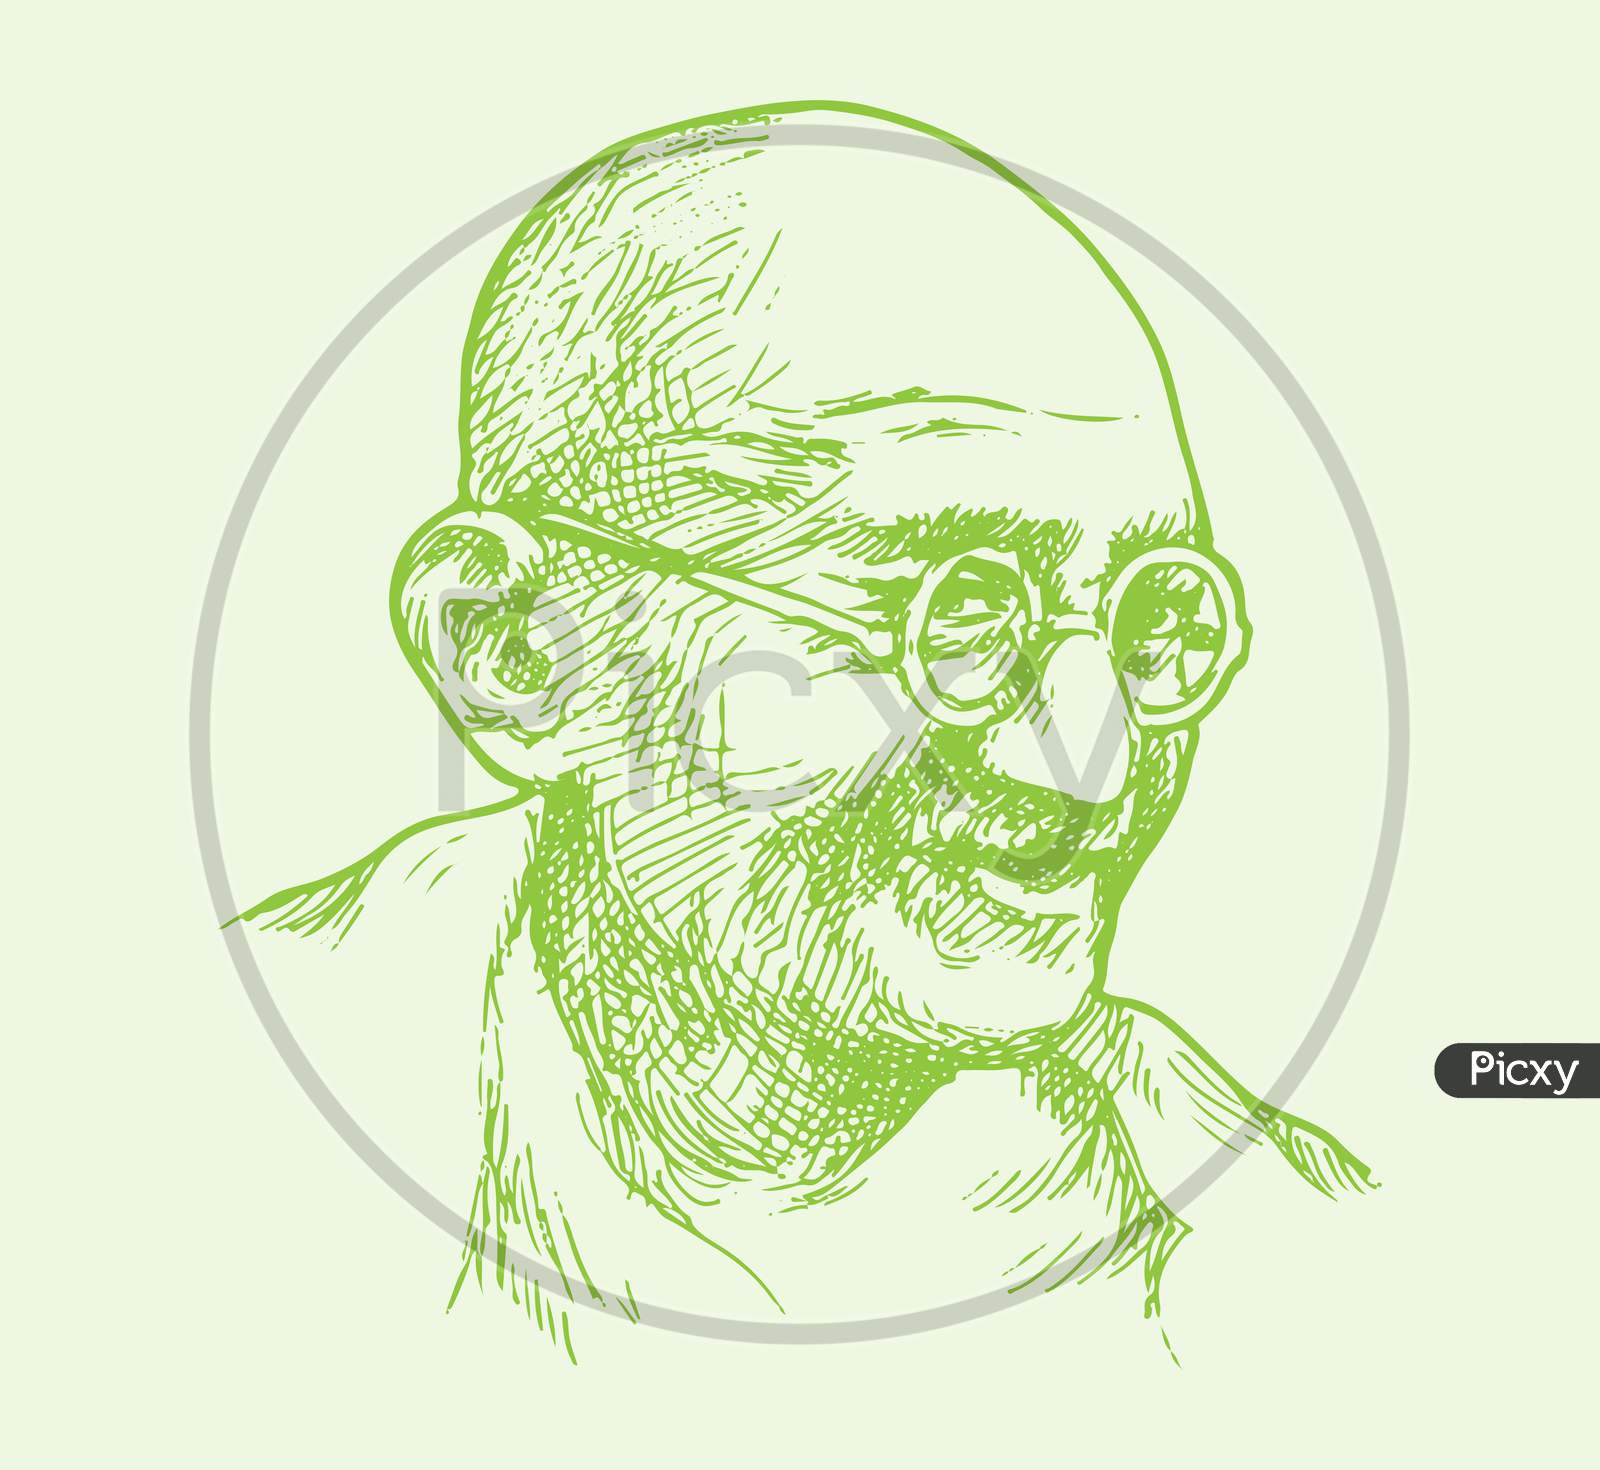 Mahatma Gandhi Poster by Wayne Pascall - Pixels